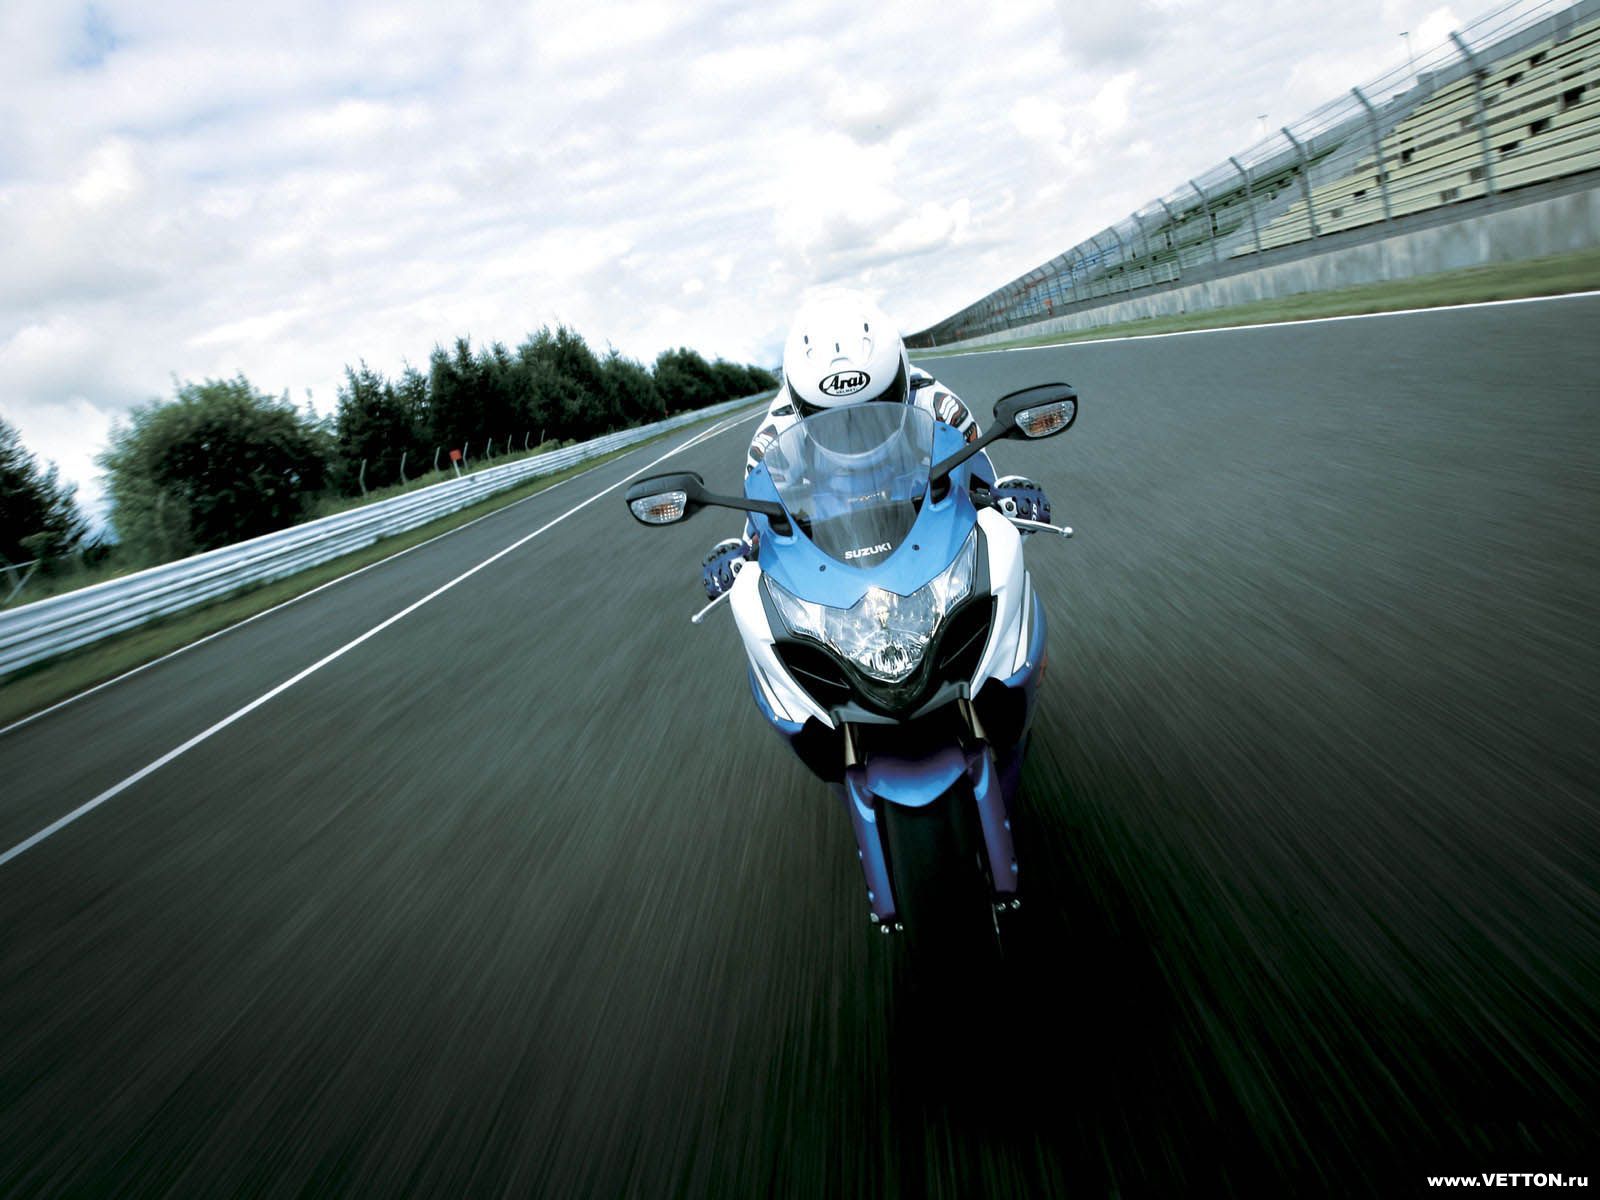 image Suzuki motorcycle